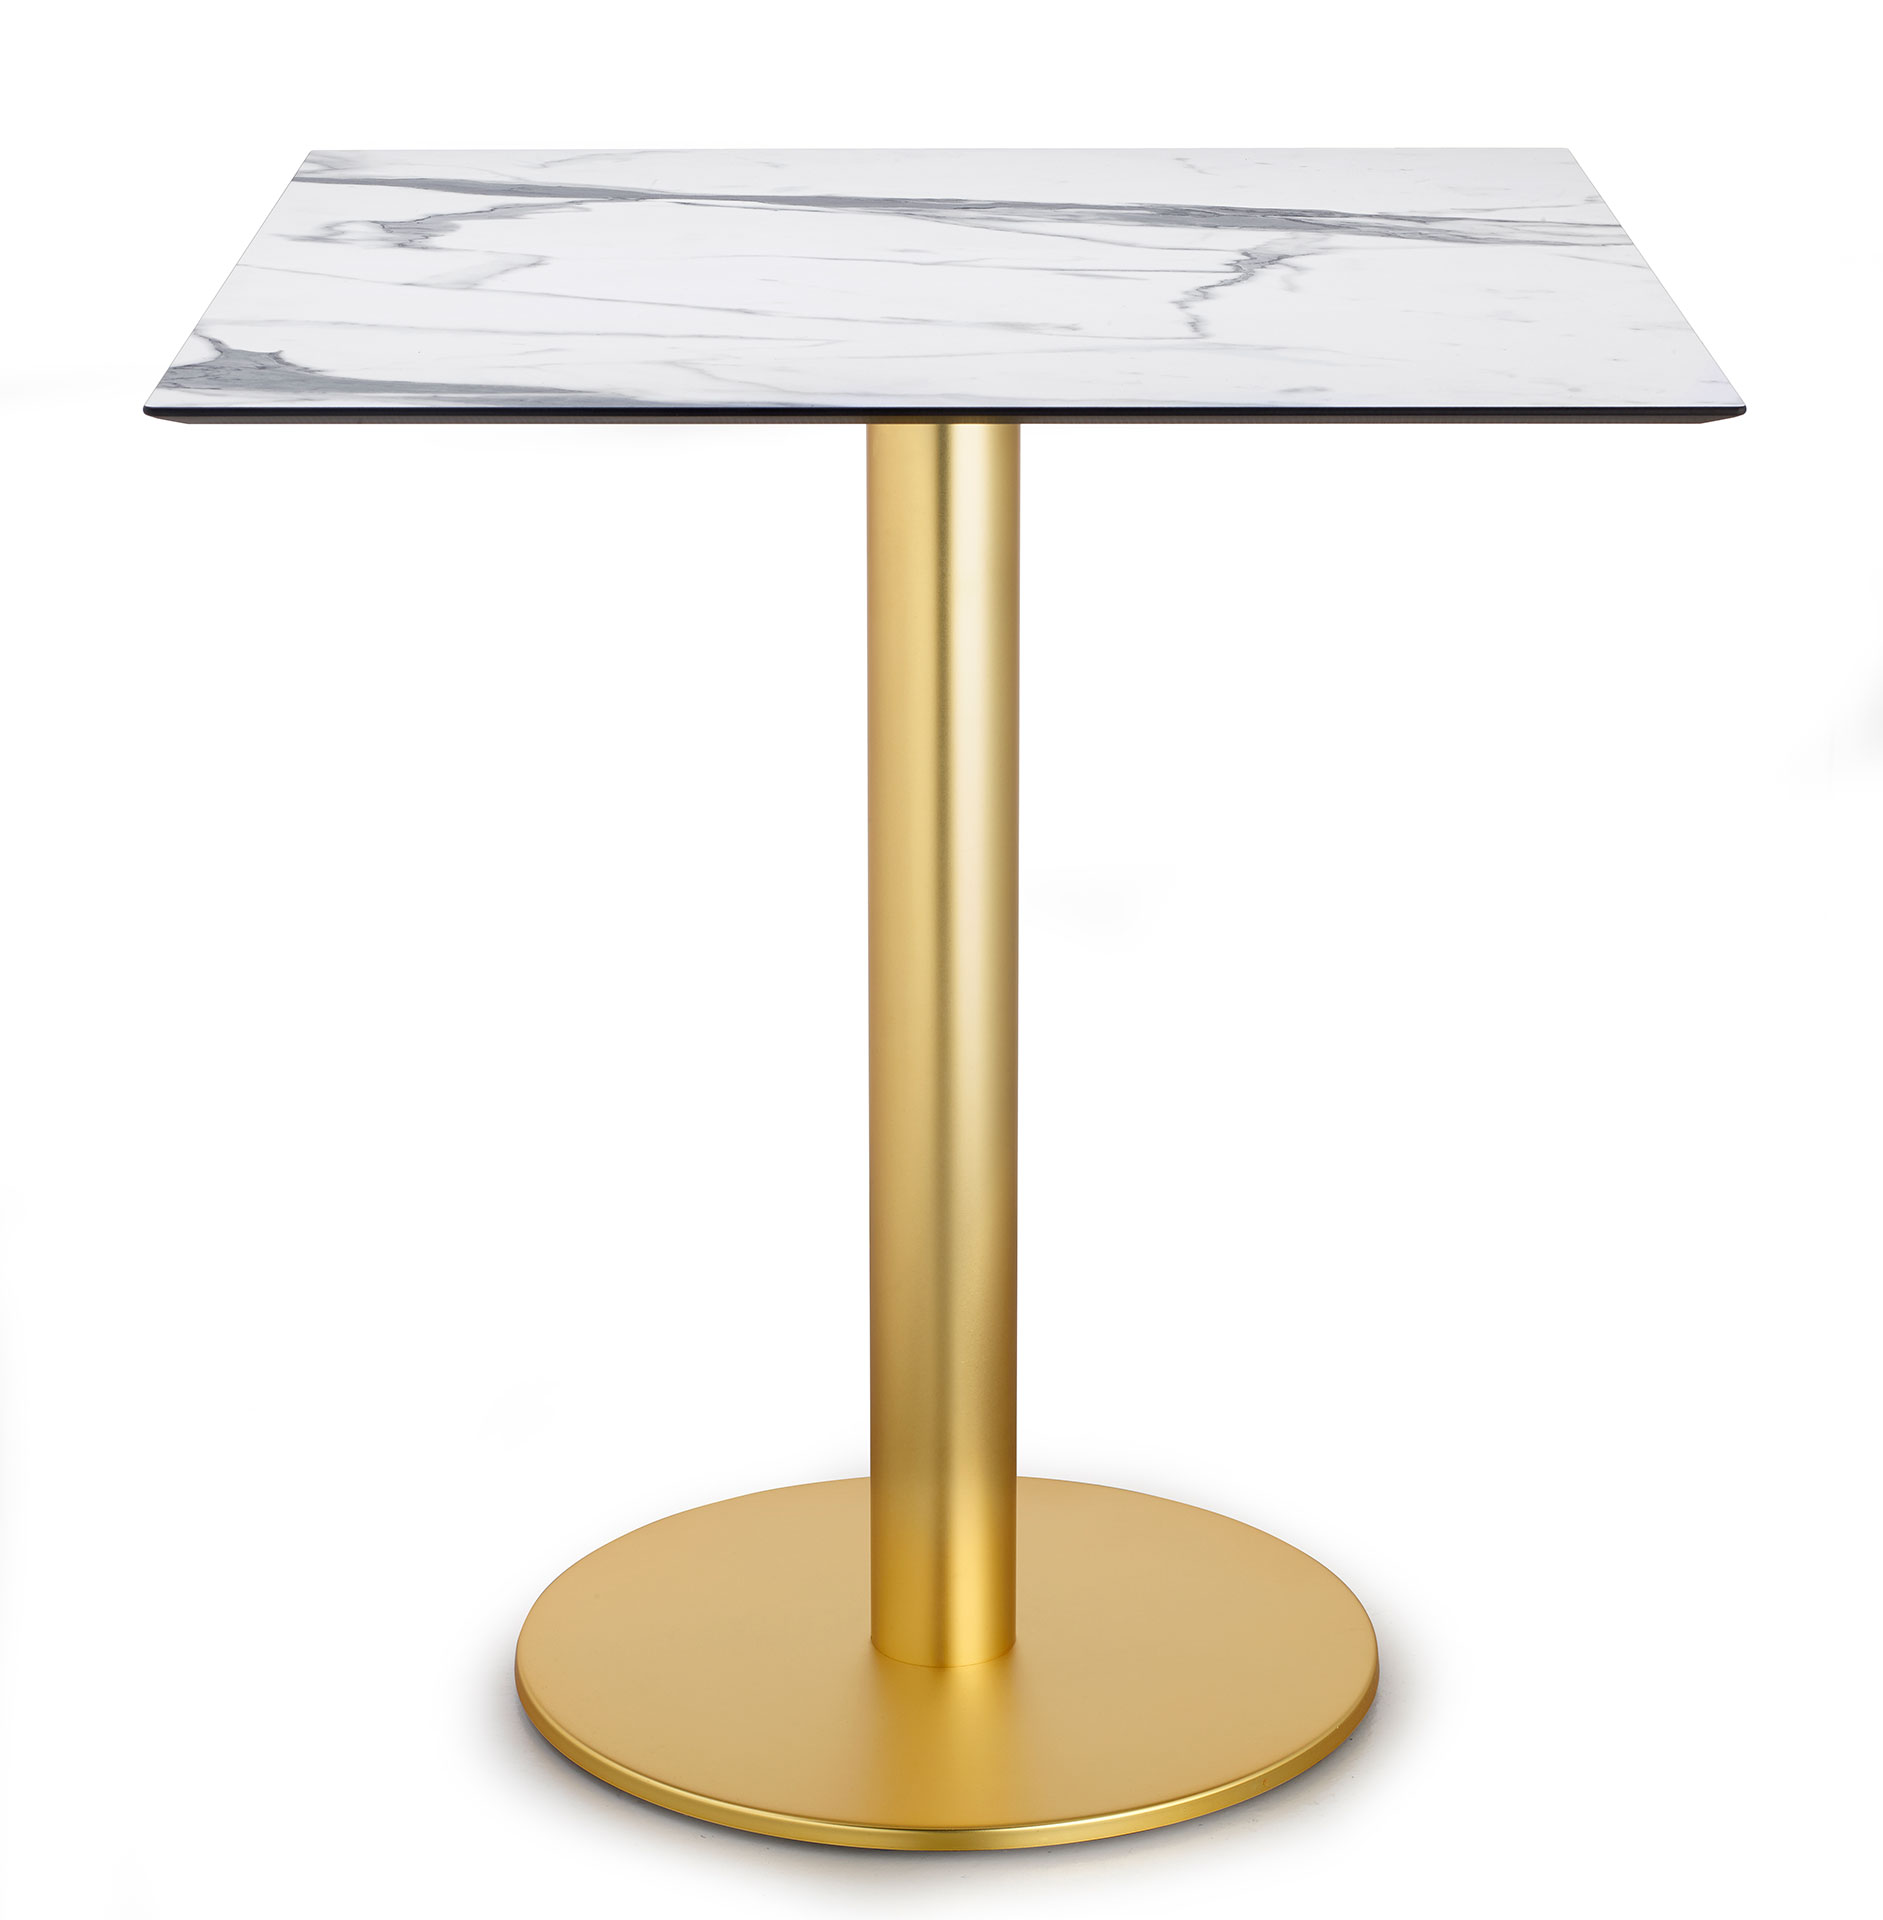 TABLE BASE TIFFANY ART. 5170 (H 73cm)